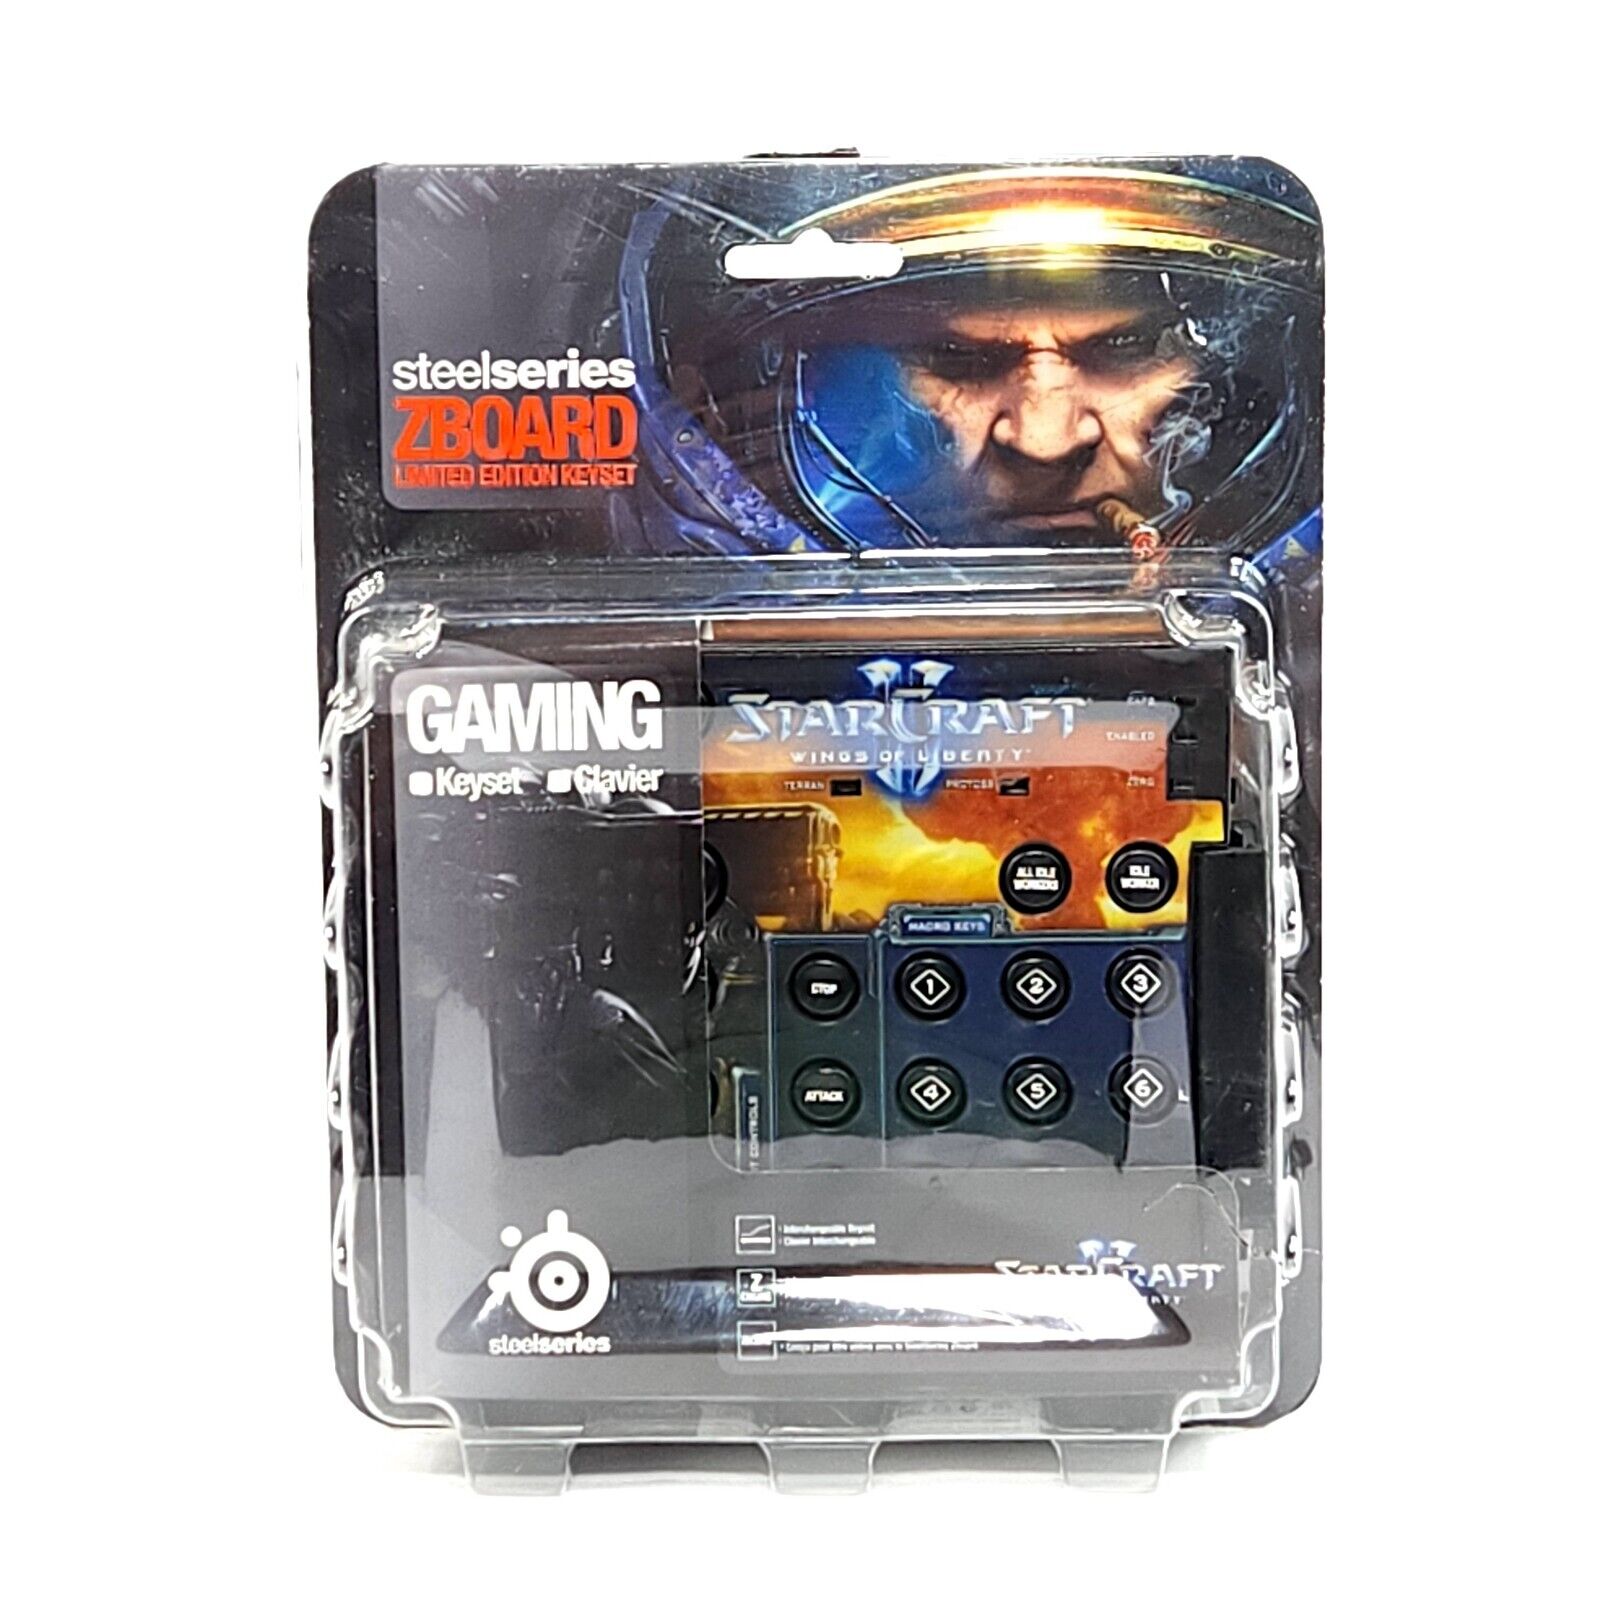 Starcraft II Gaming Keyboard Steelseries Zboard Keyset Limited Edition USB